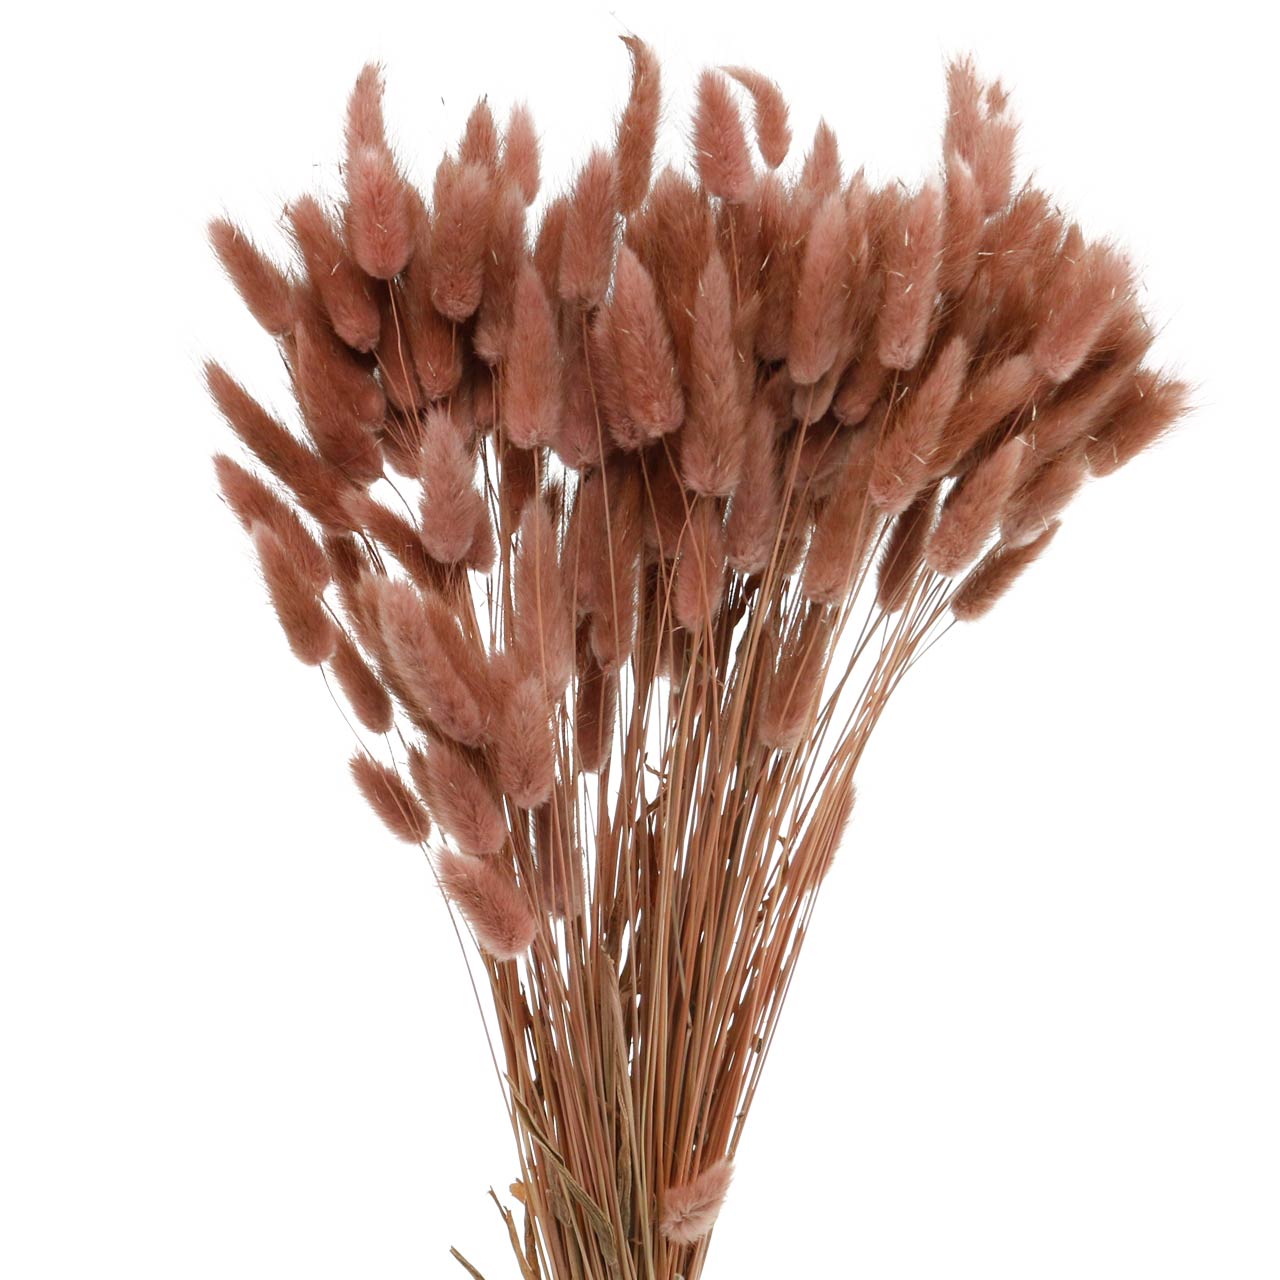 Herbe queues de lapins rouges, Pennisetum messiacum : planter